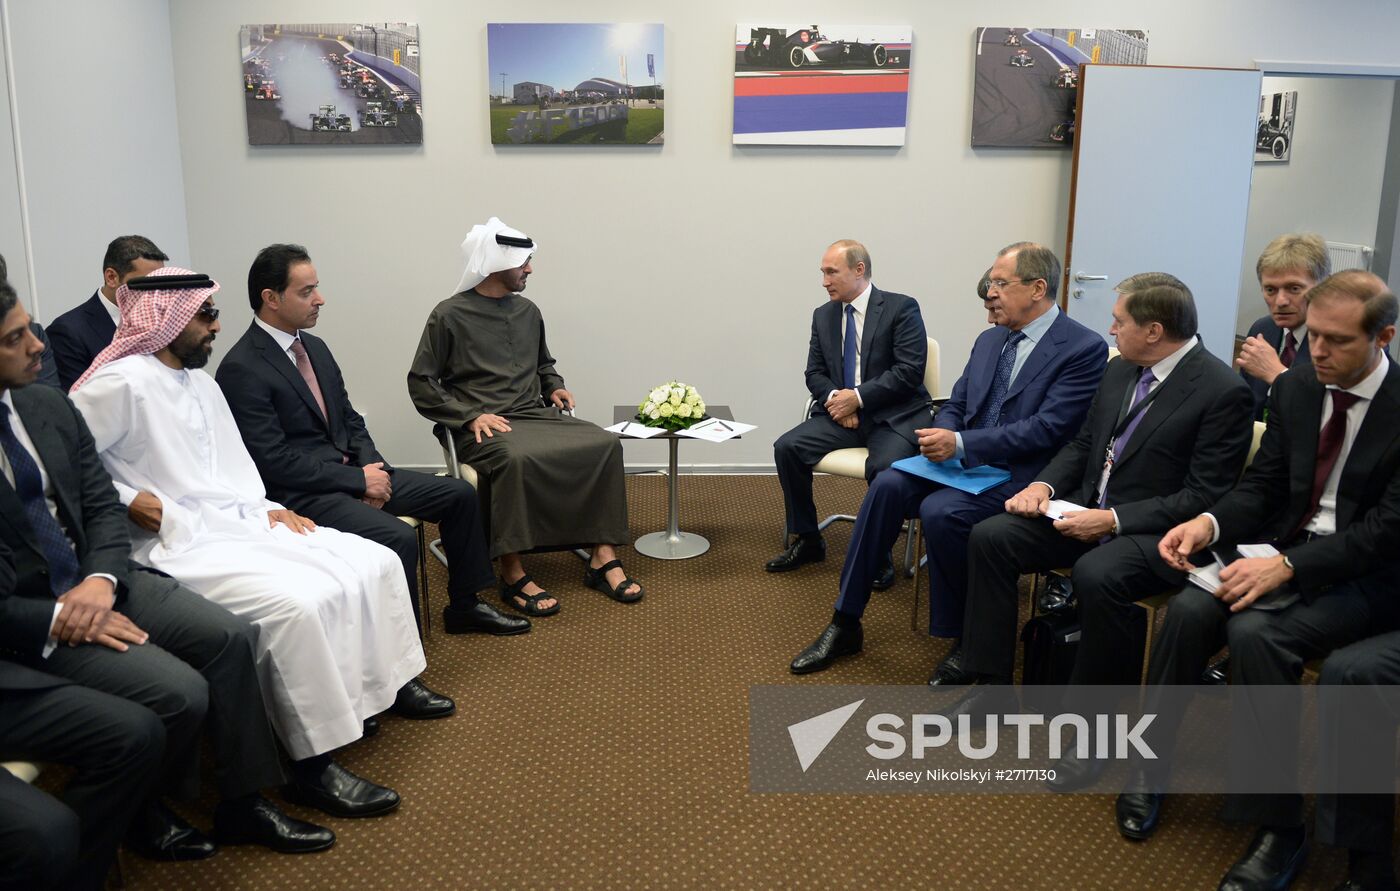 Vladimir Putin meets with Crown Prince of Abu Dhabi Mohammed bin Zayed Al Nahyan